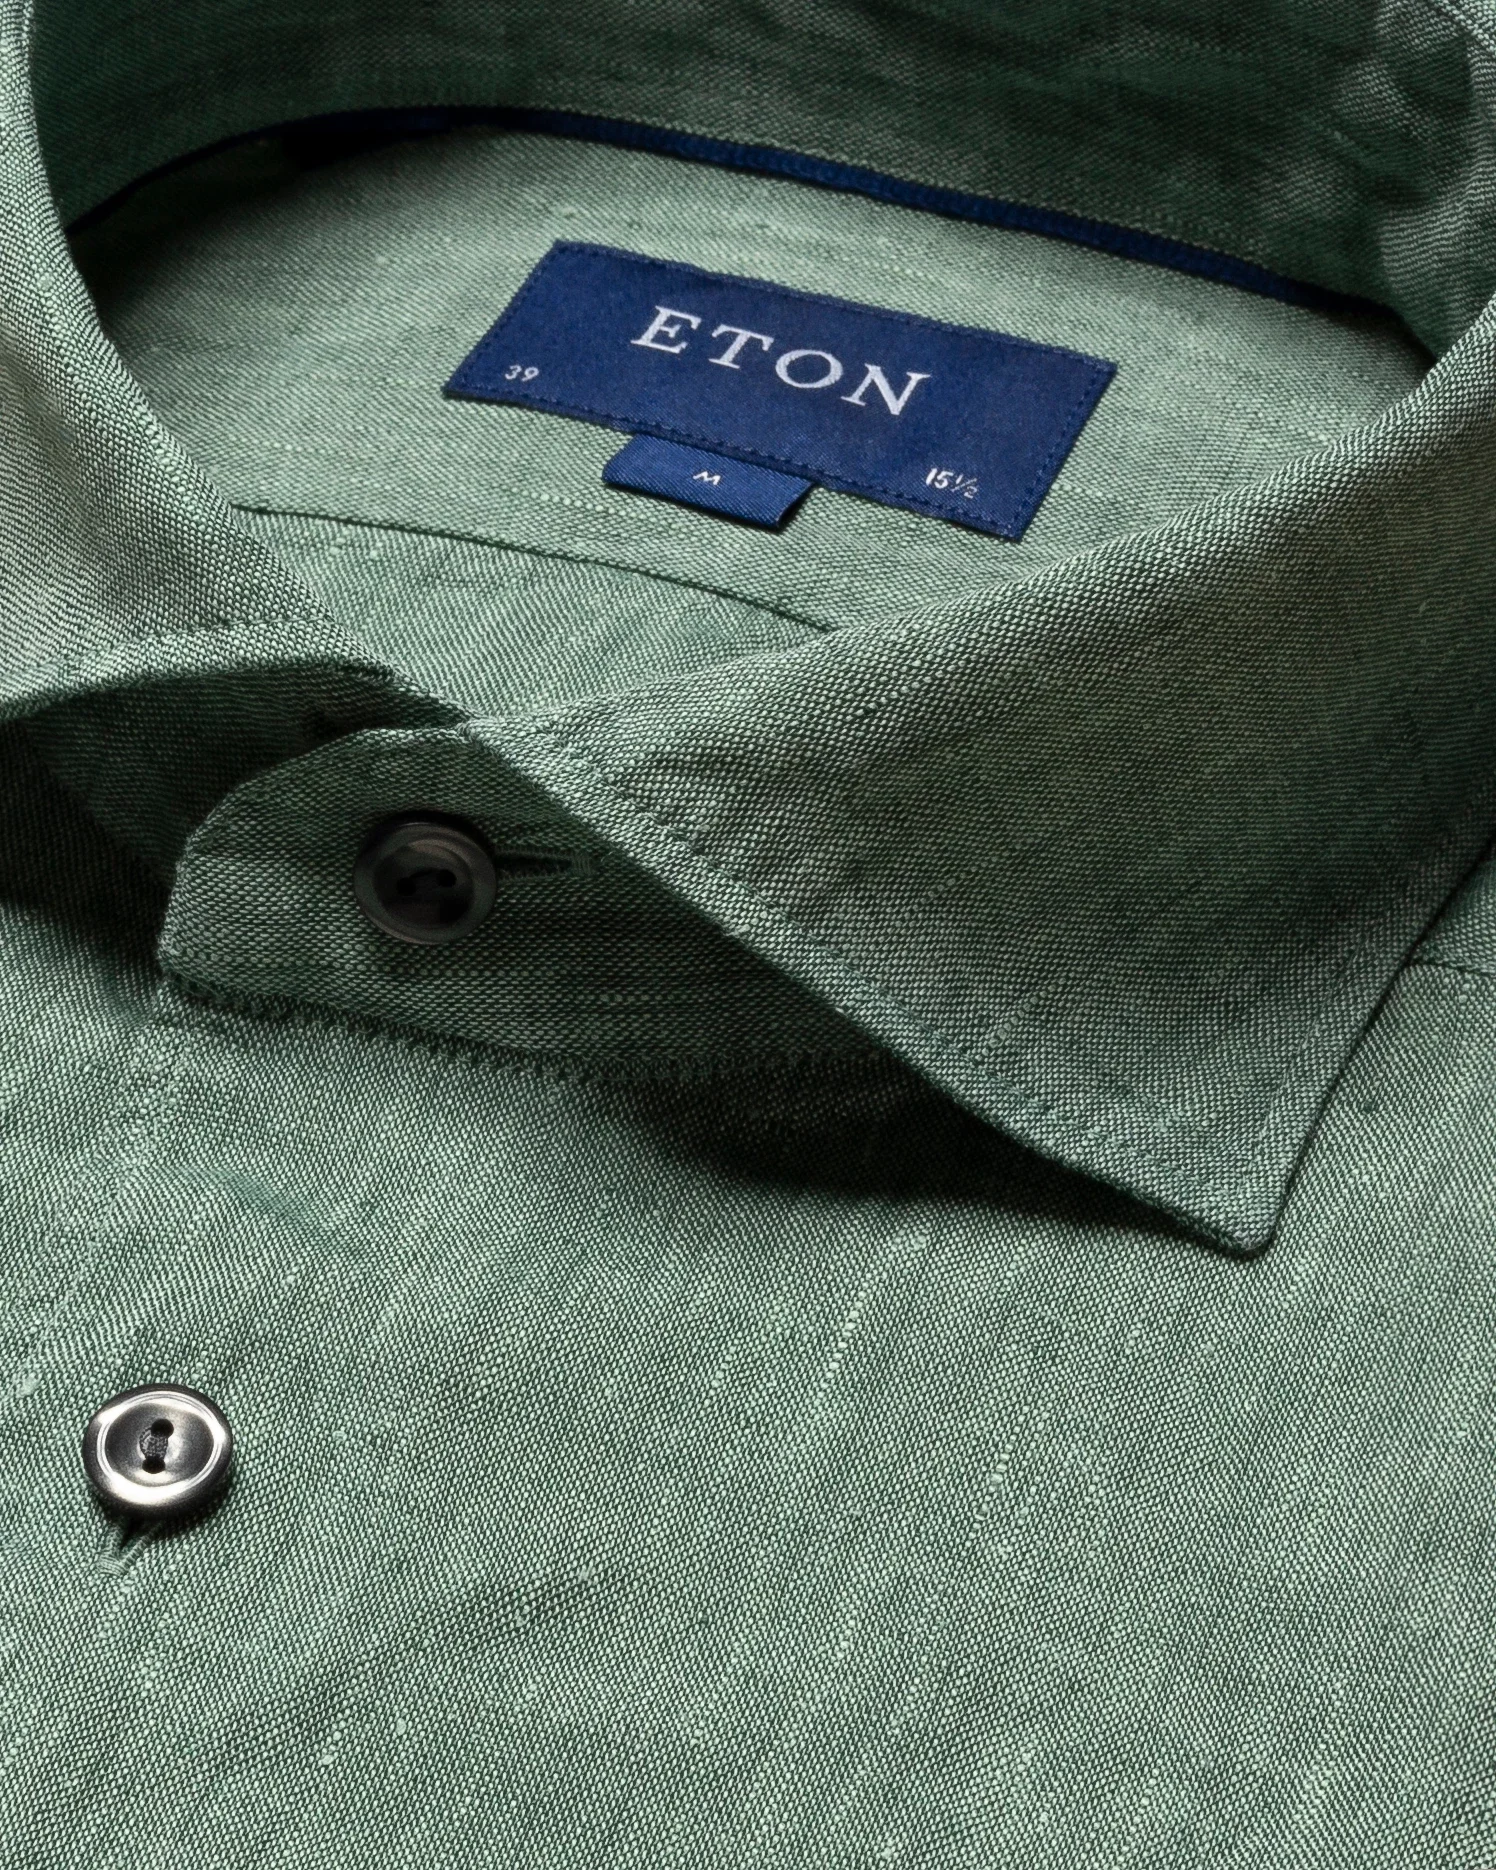 Eton - dark green linen polo shirt short sleeve